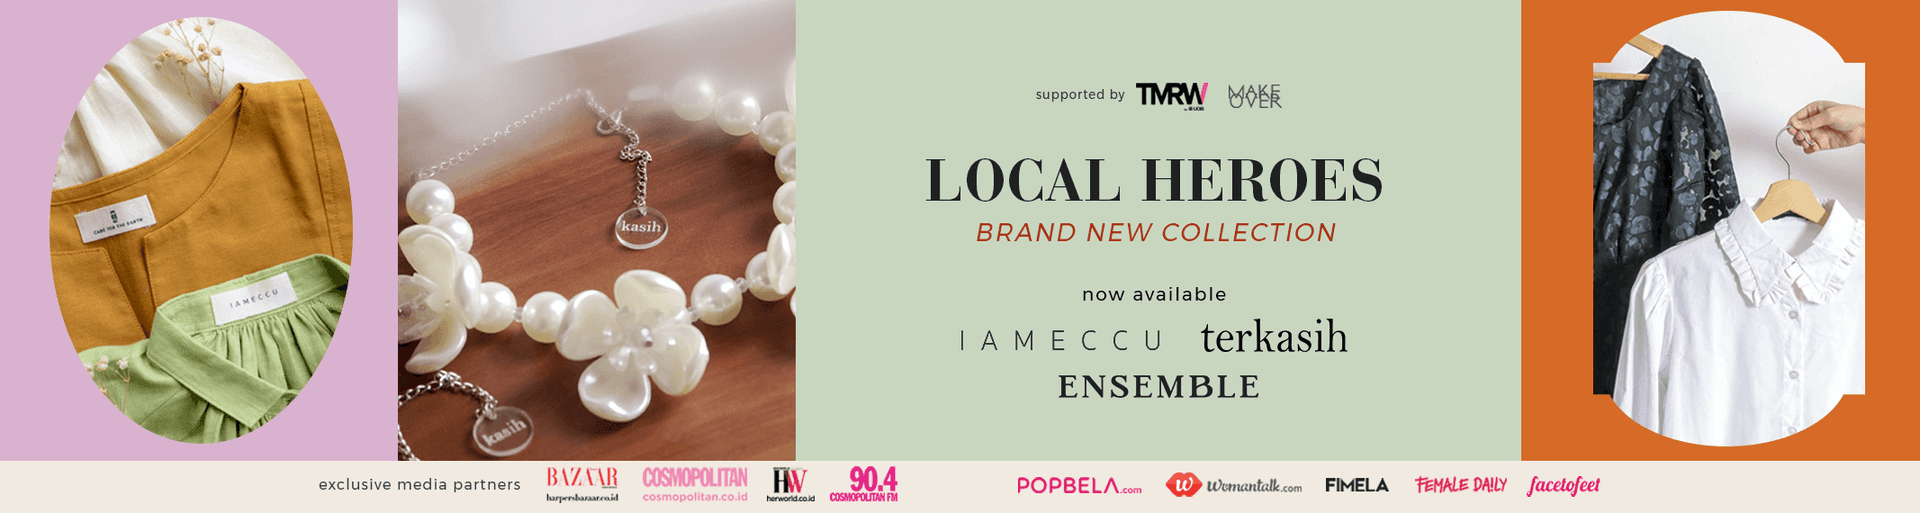 Local heroes banner iameccu terkasih peark necklace blouses ensemble tmrw makeover tinkerlust